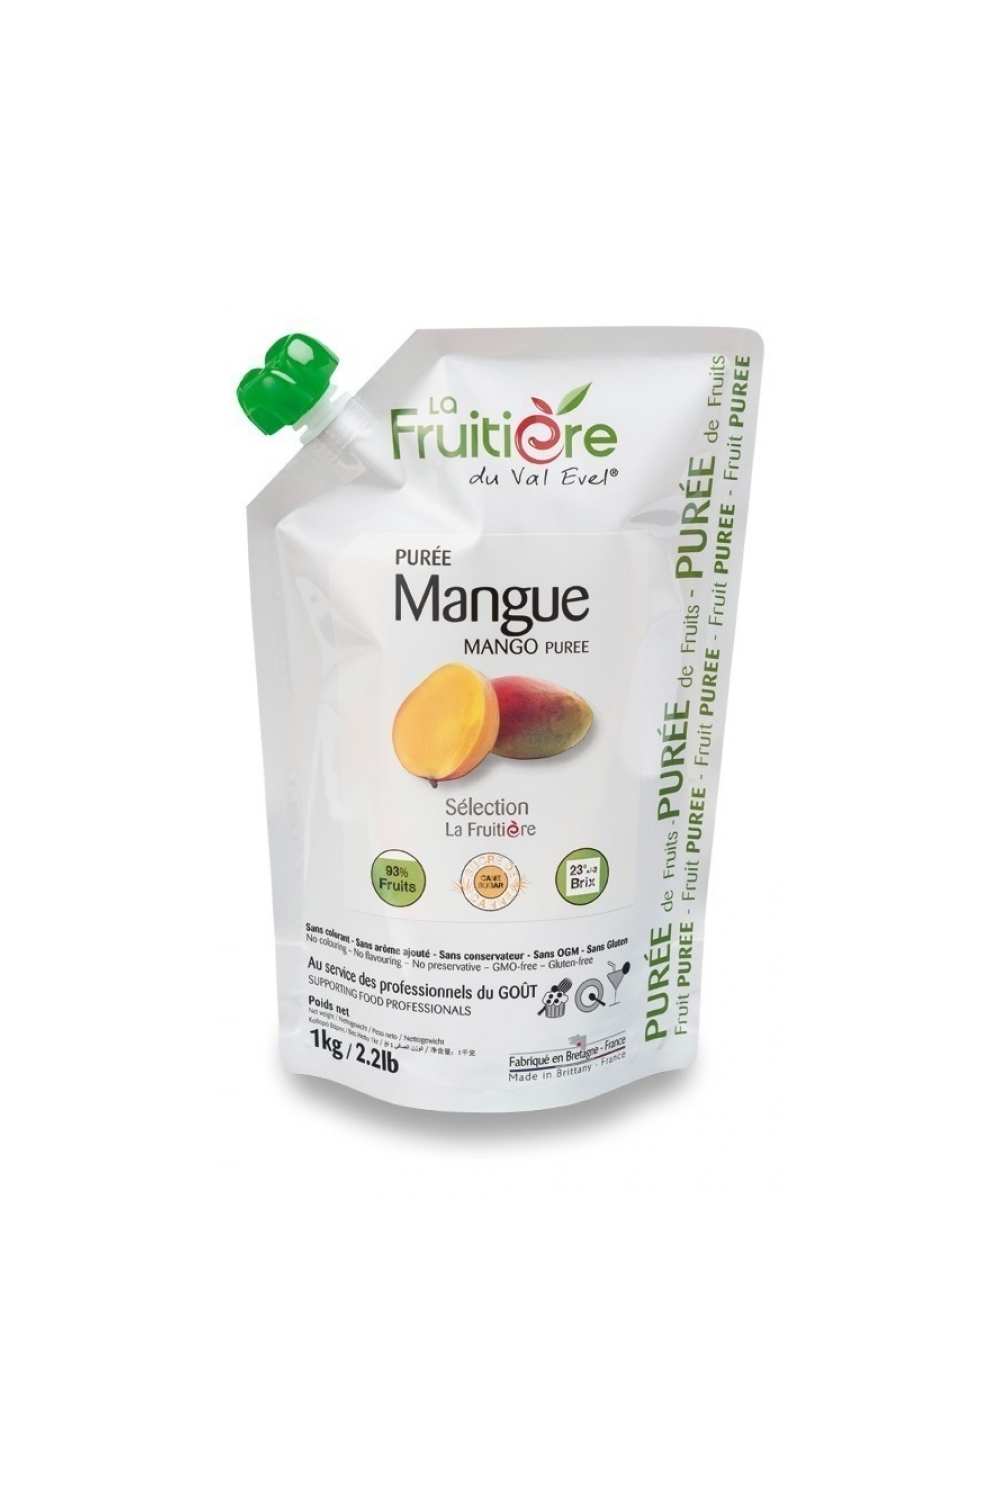 Purea di frutta Mango 1 kg La Fruitiere du Val Evel